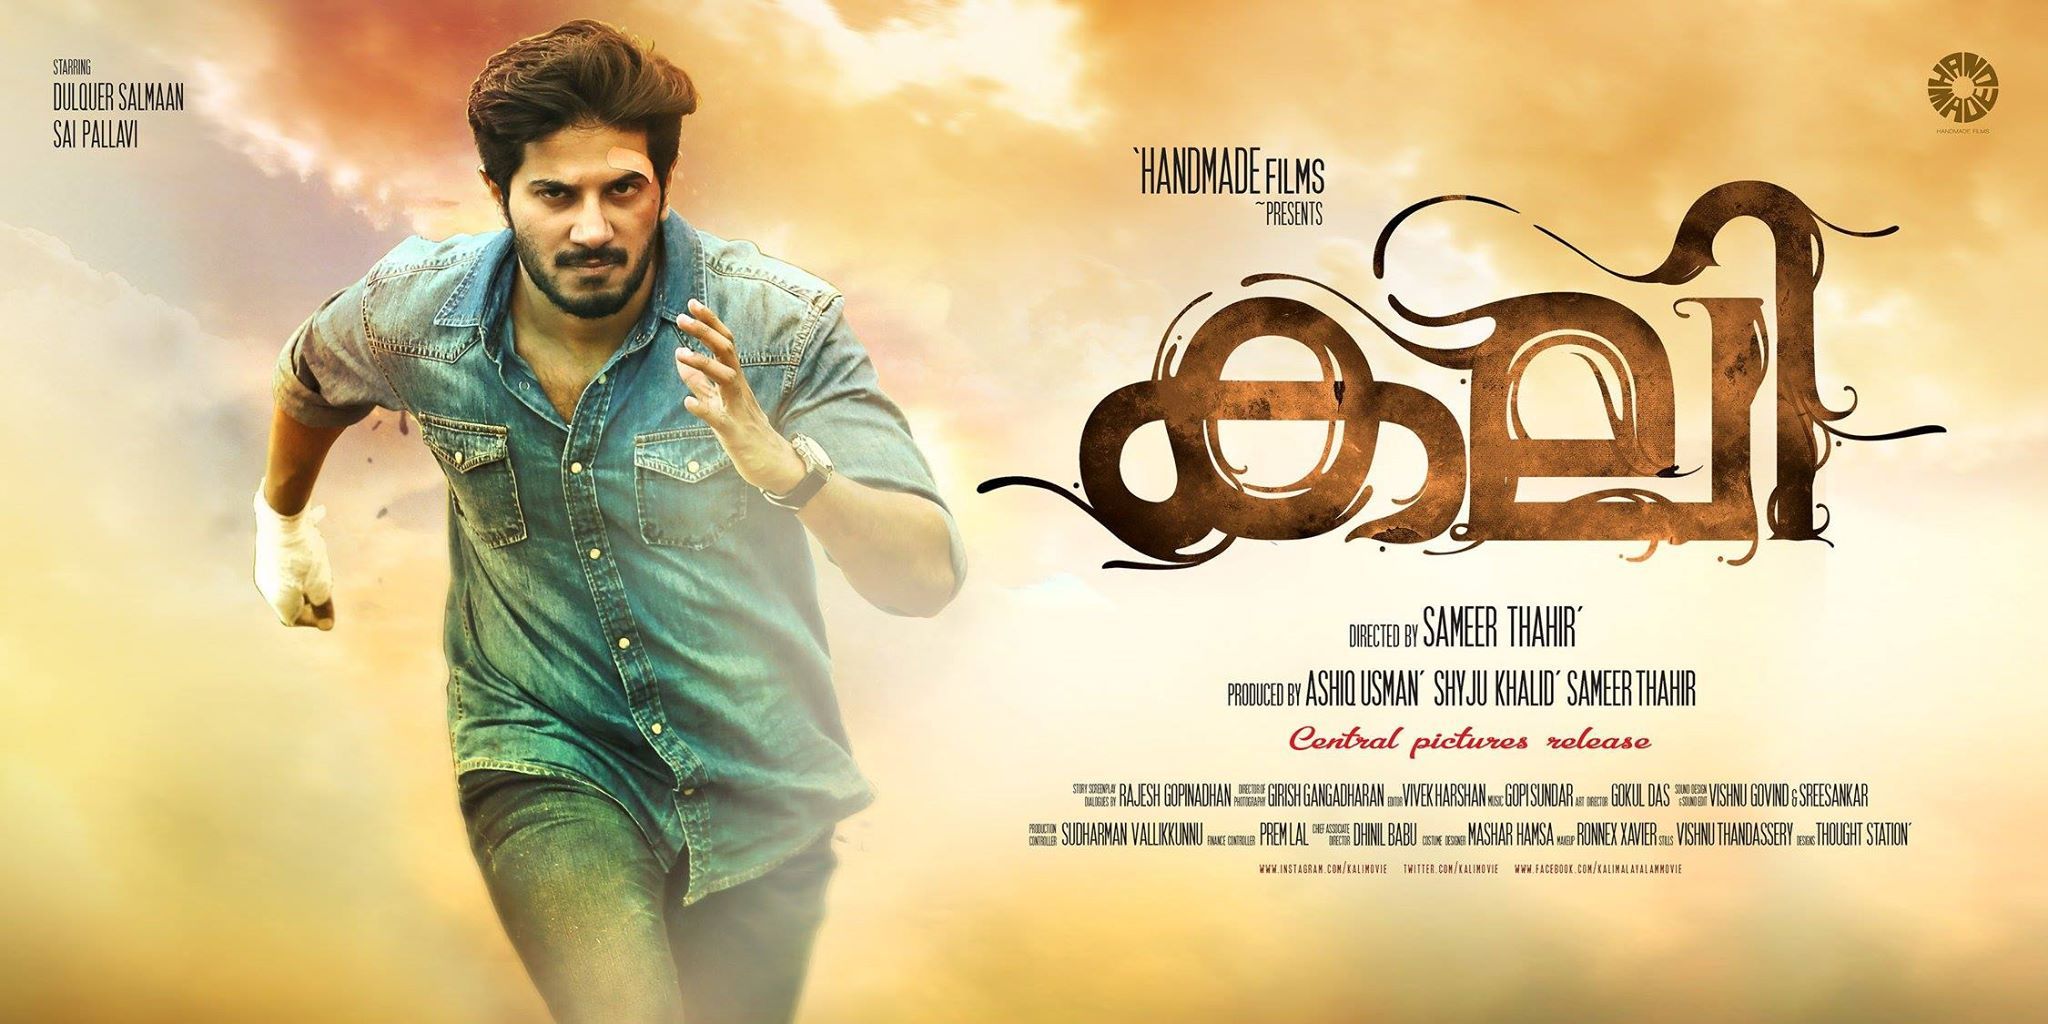 Kali Malayalam Movie Poster